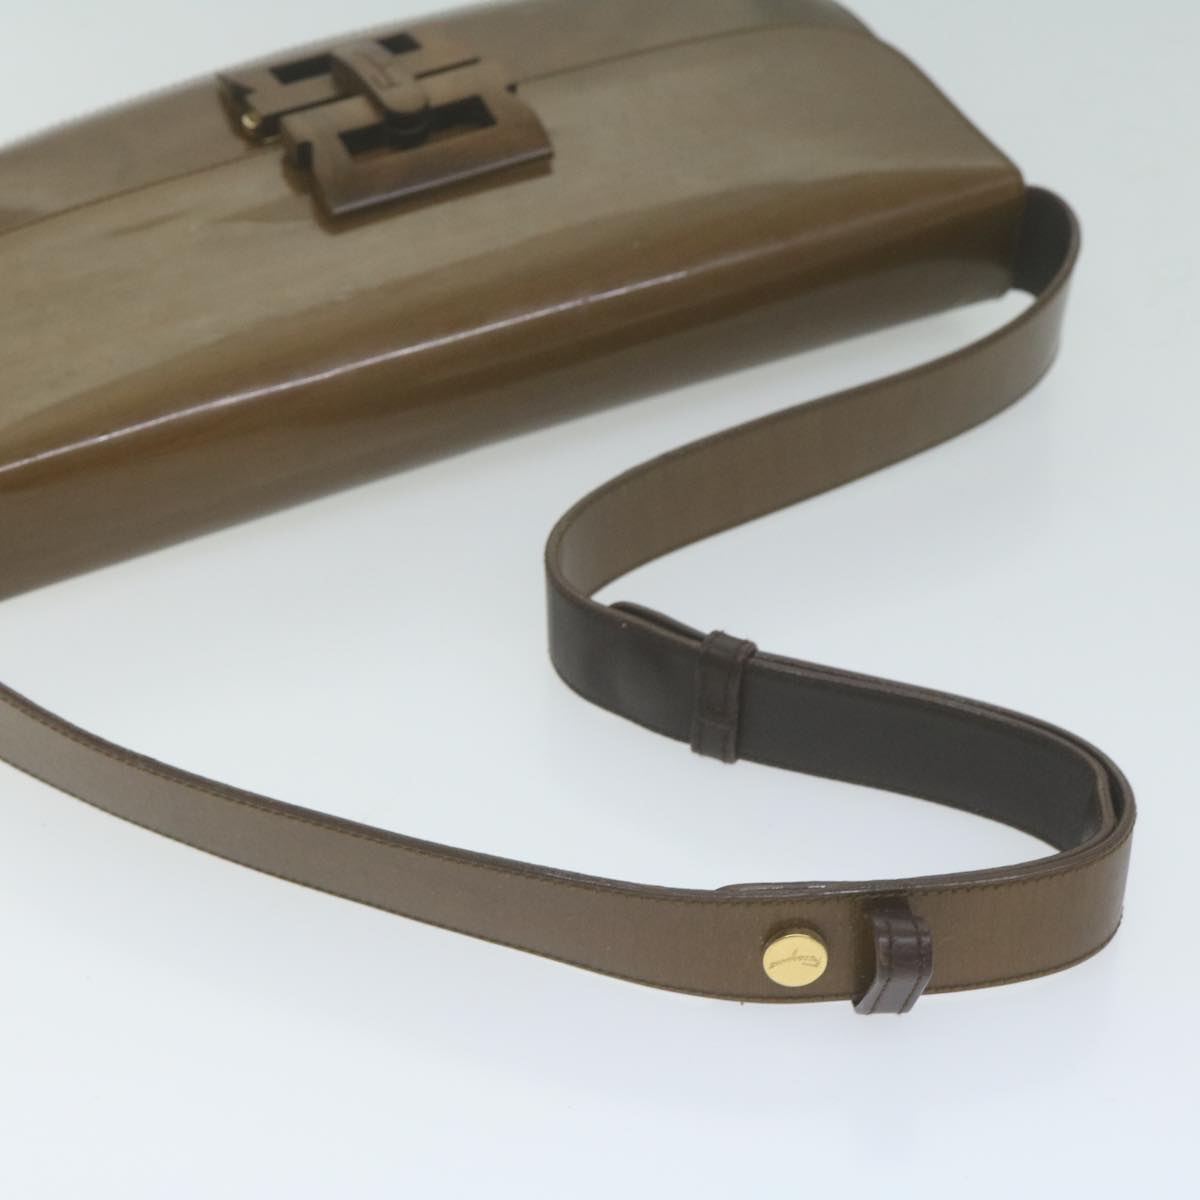 Salvatore Ferragamo Shoulder Bag Patent leather Brown Auth 65739